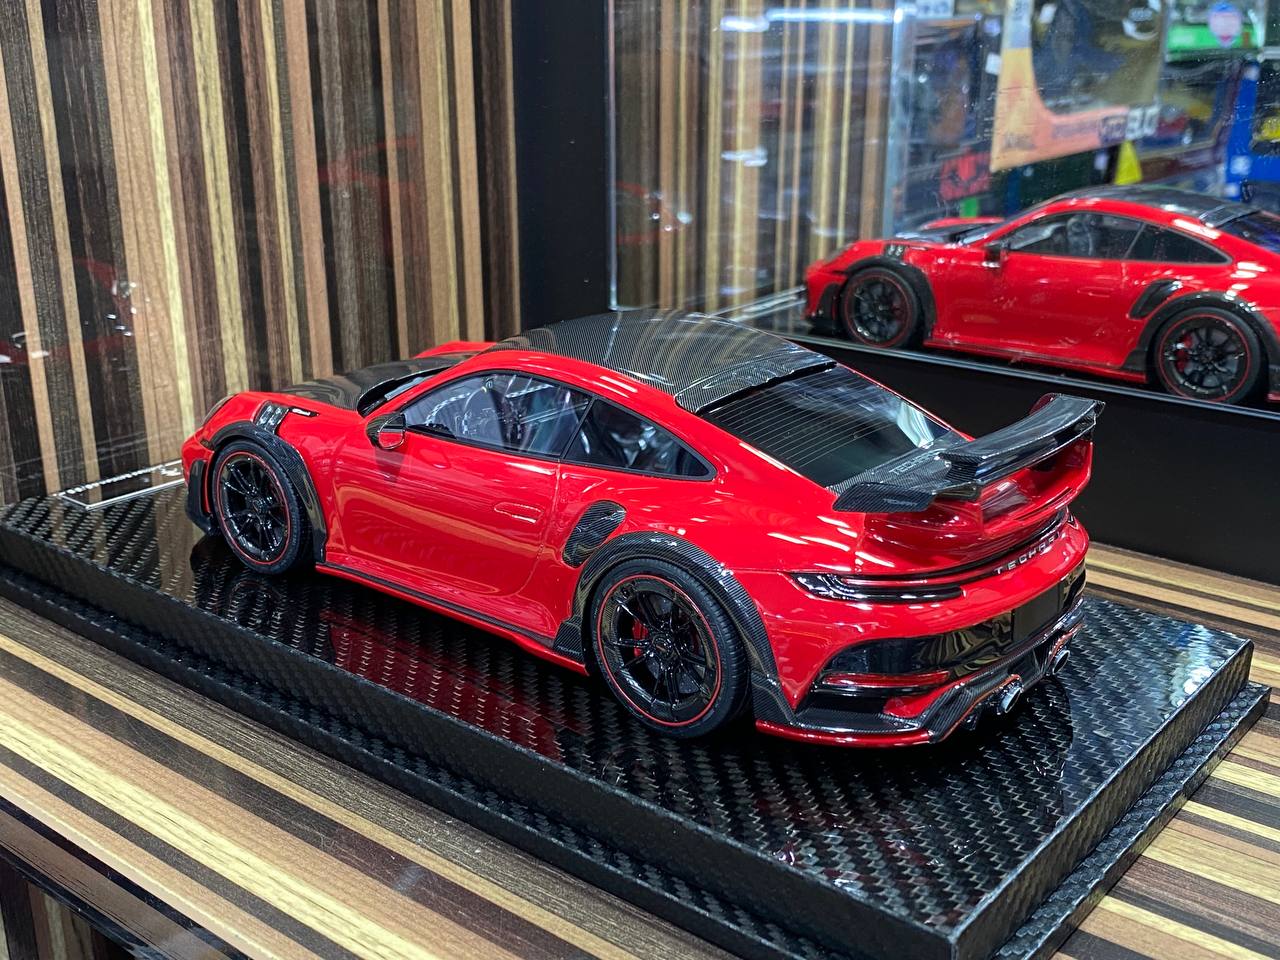 1/18 VIP Models Resin Model - Porsche 992 Turbo S GT Street R TechArt in Striking Red|Sold in Dturman.com Dubai UAE.